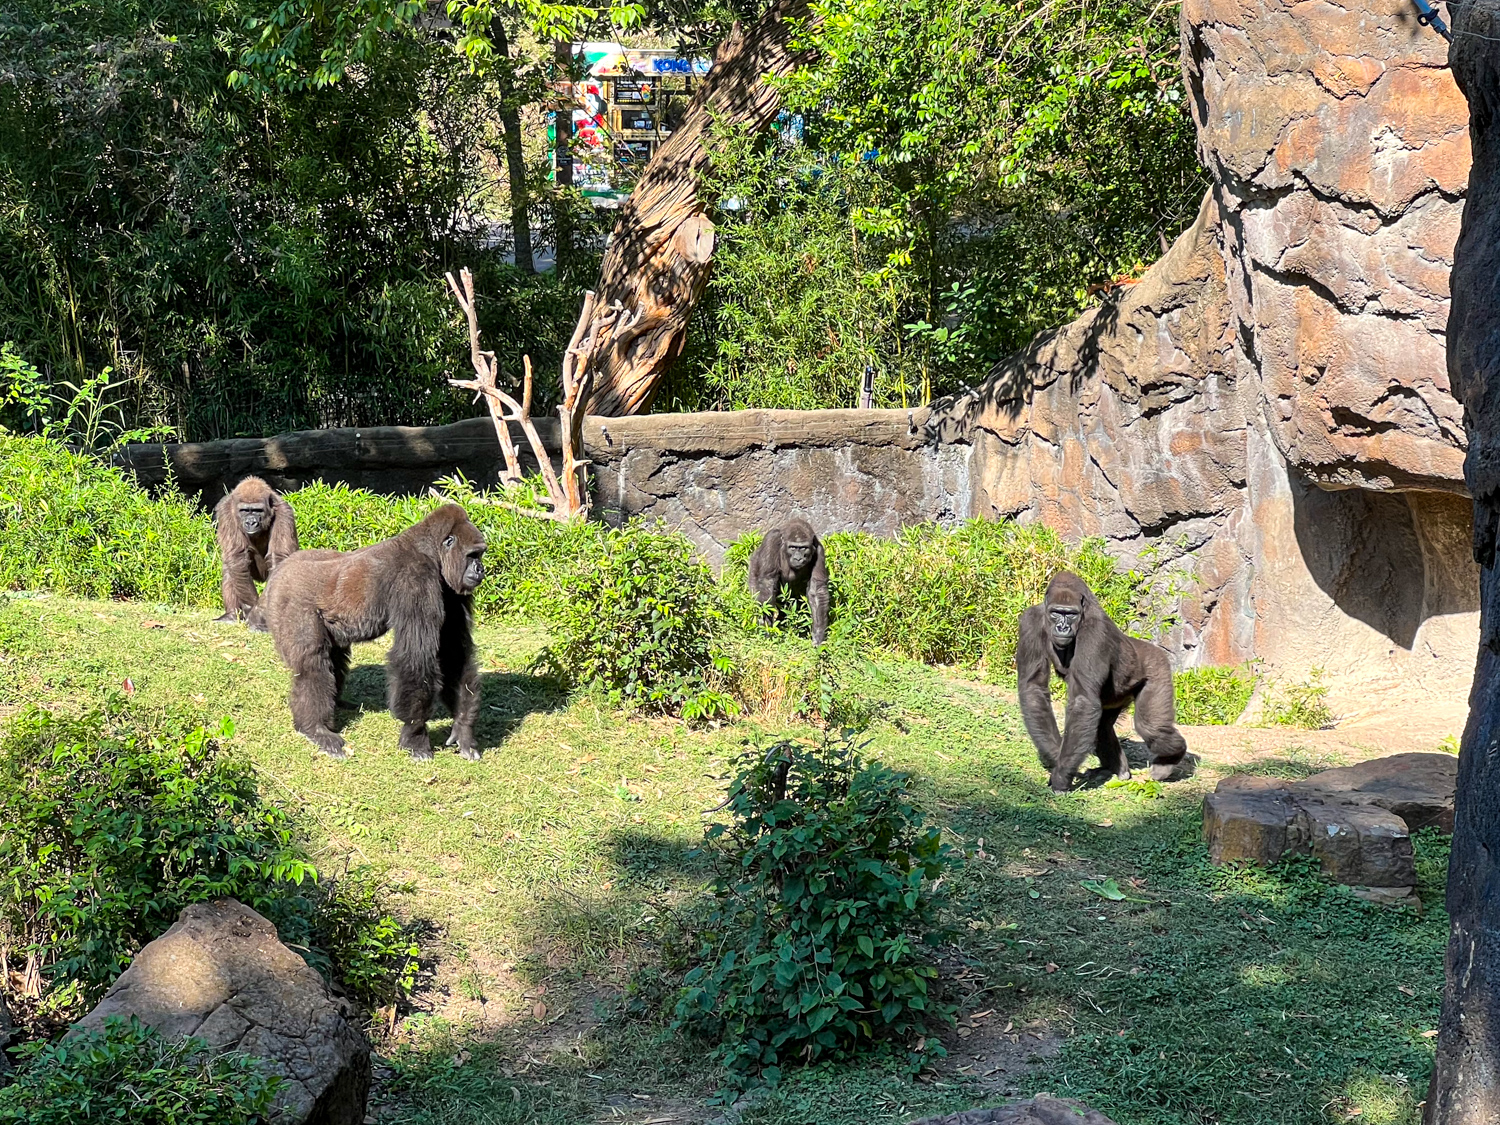 Mountain gorillas at the Dallas Zoo